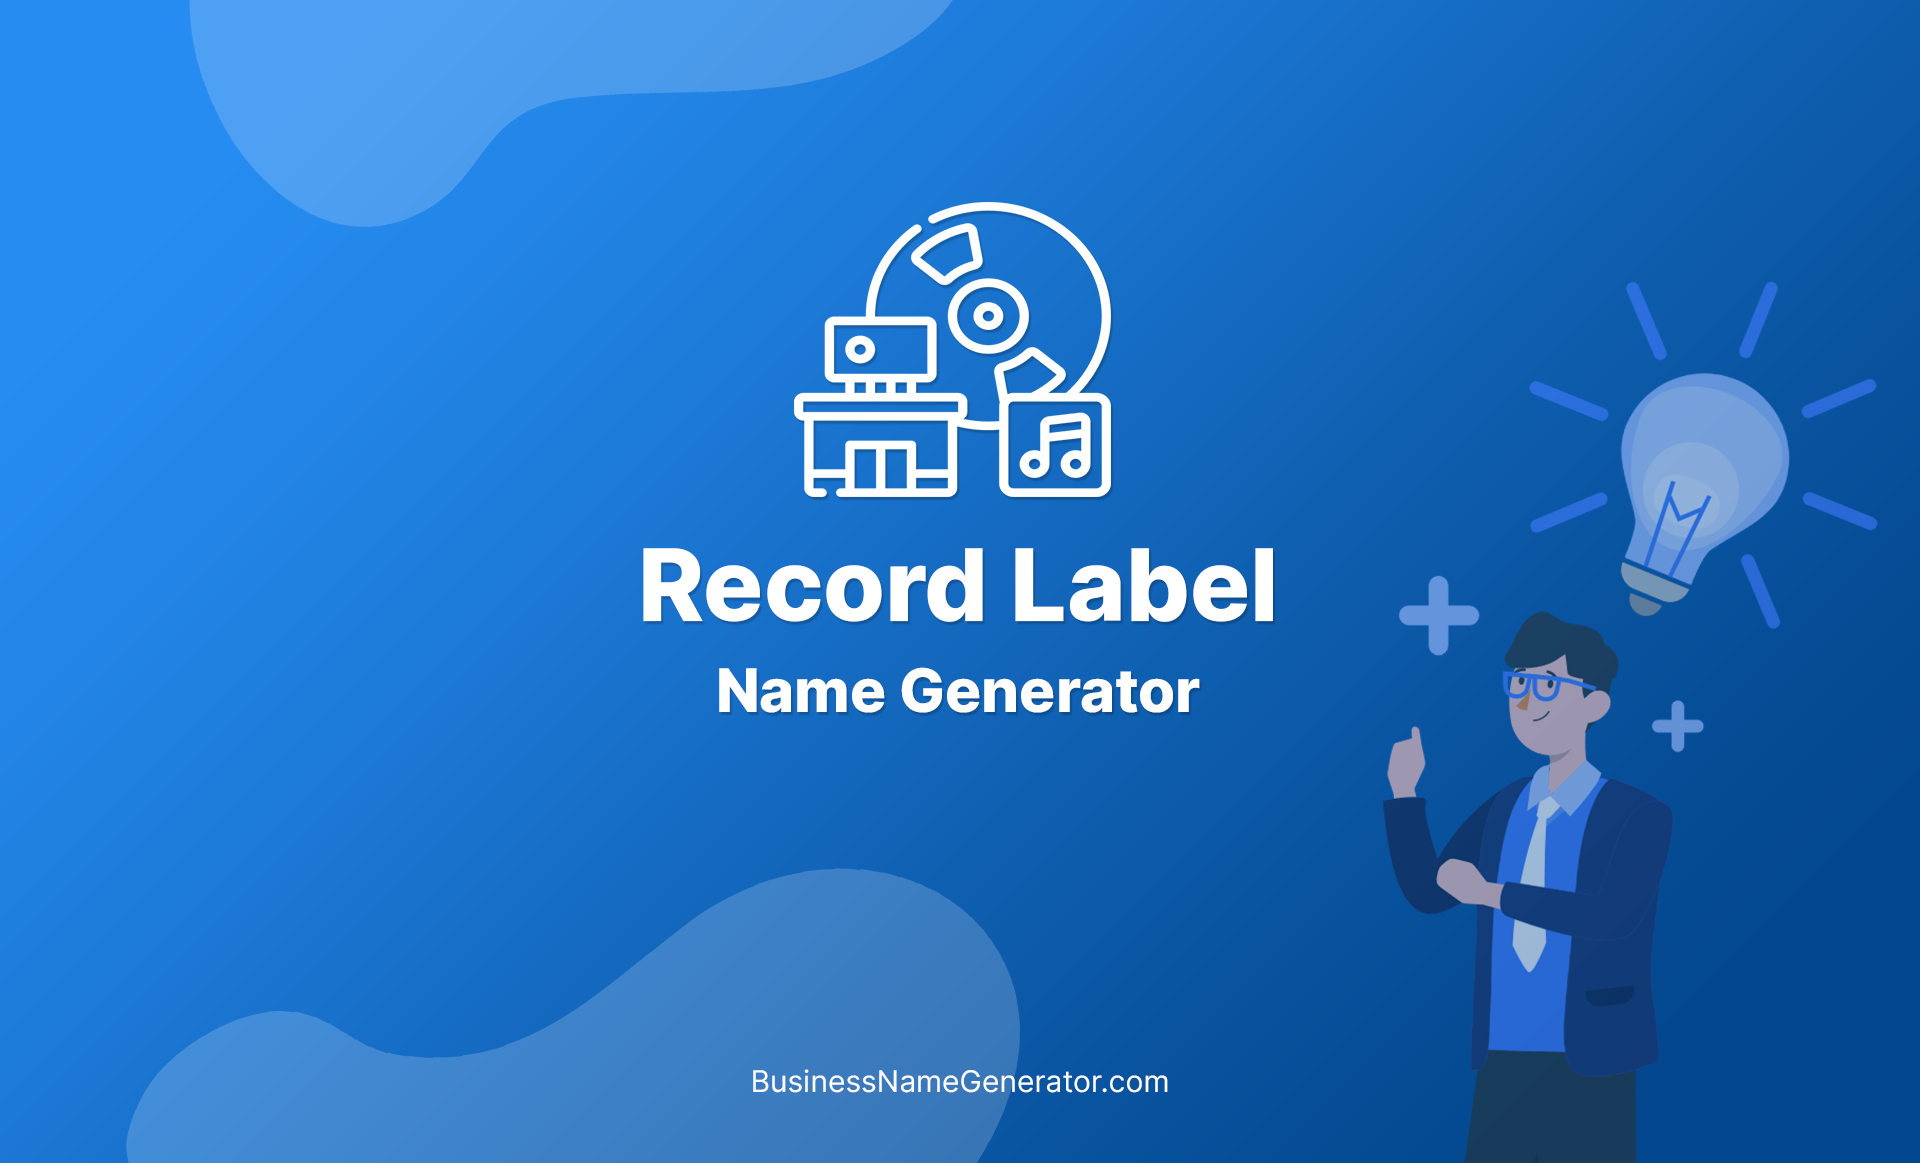 Record Label Name Generator